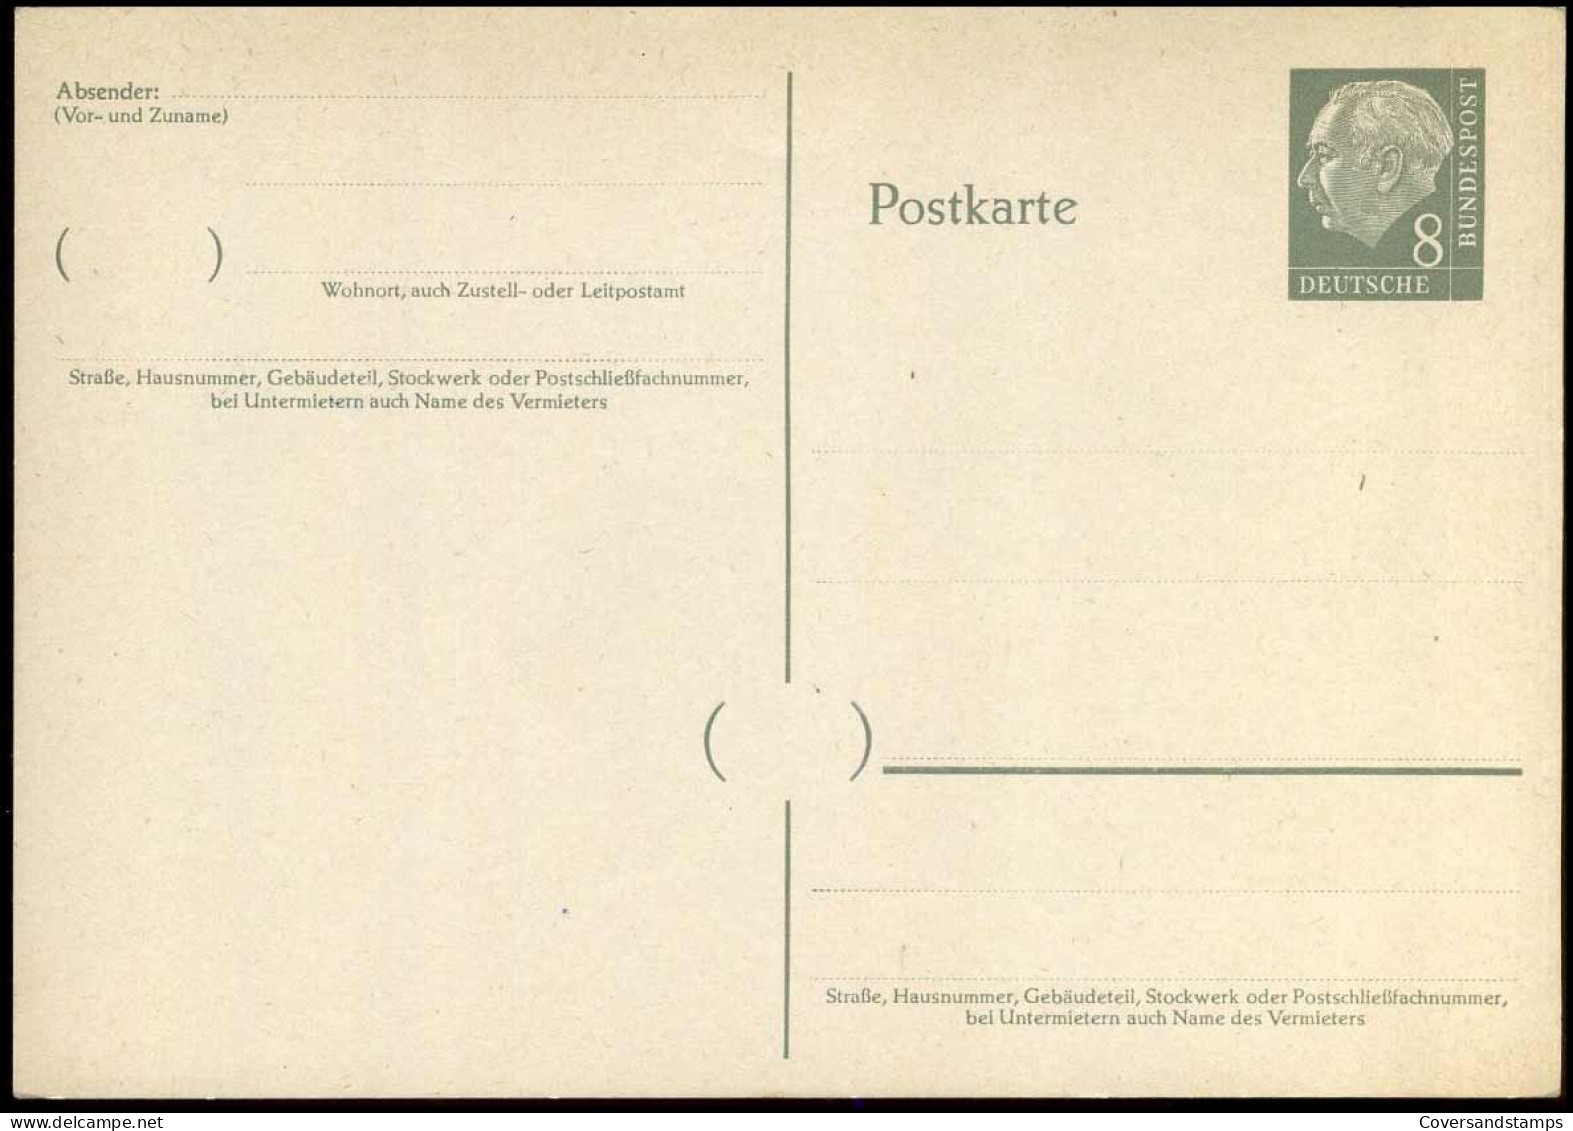 Postkarte - 8 Pfennig - Postcards - Mint